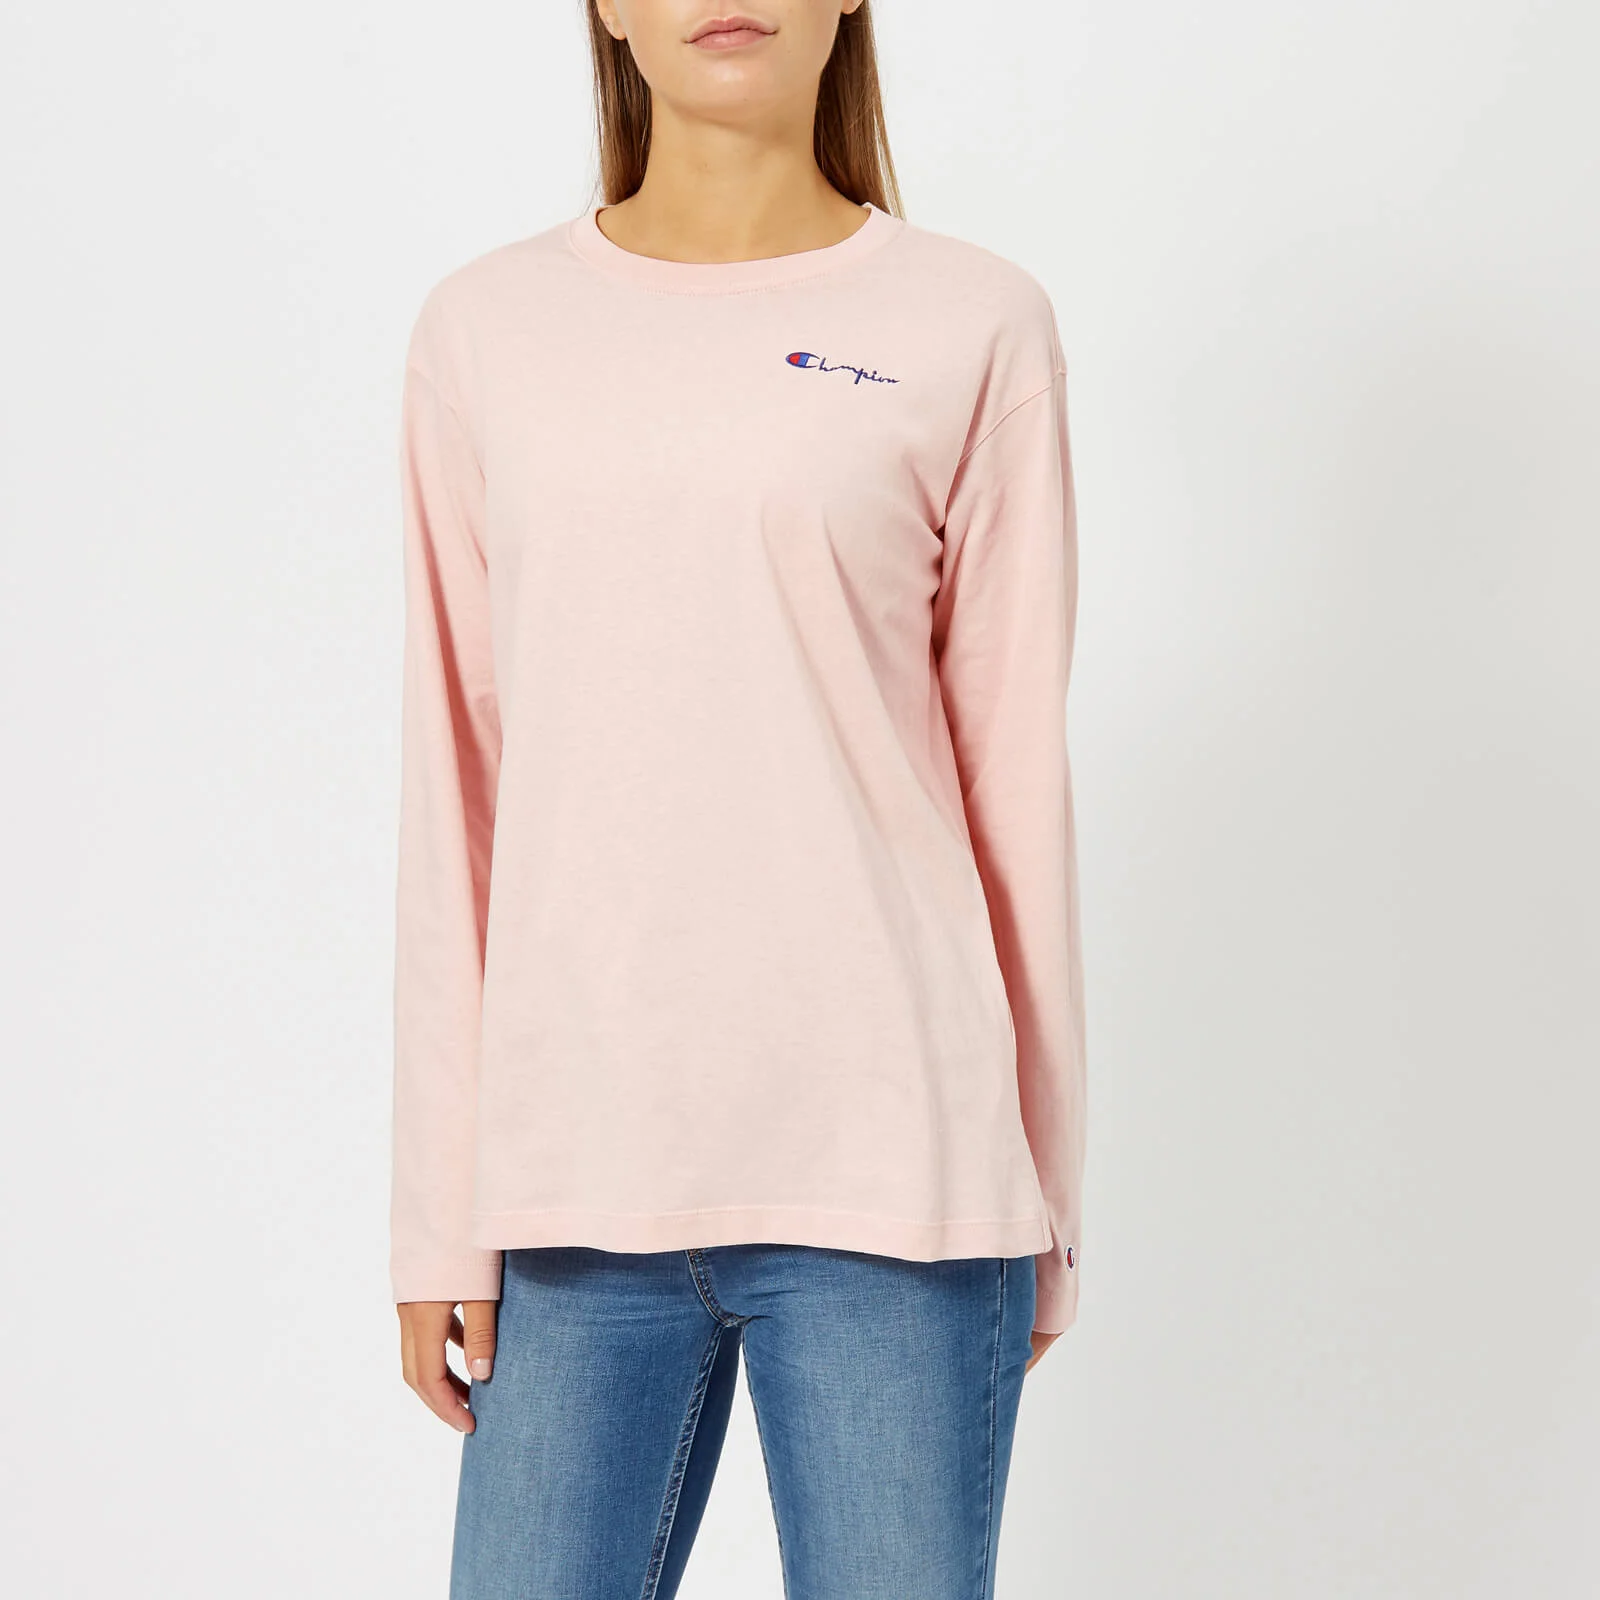 Champion Women's Long Sleeve T-Shirt - Pink Image 1